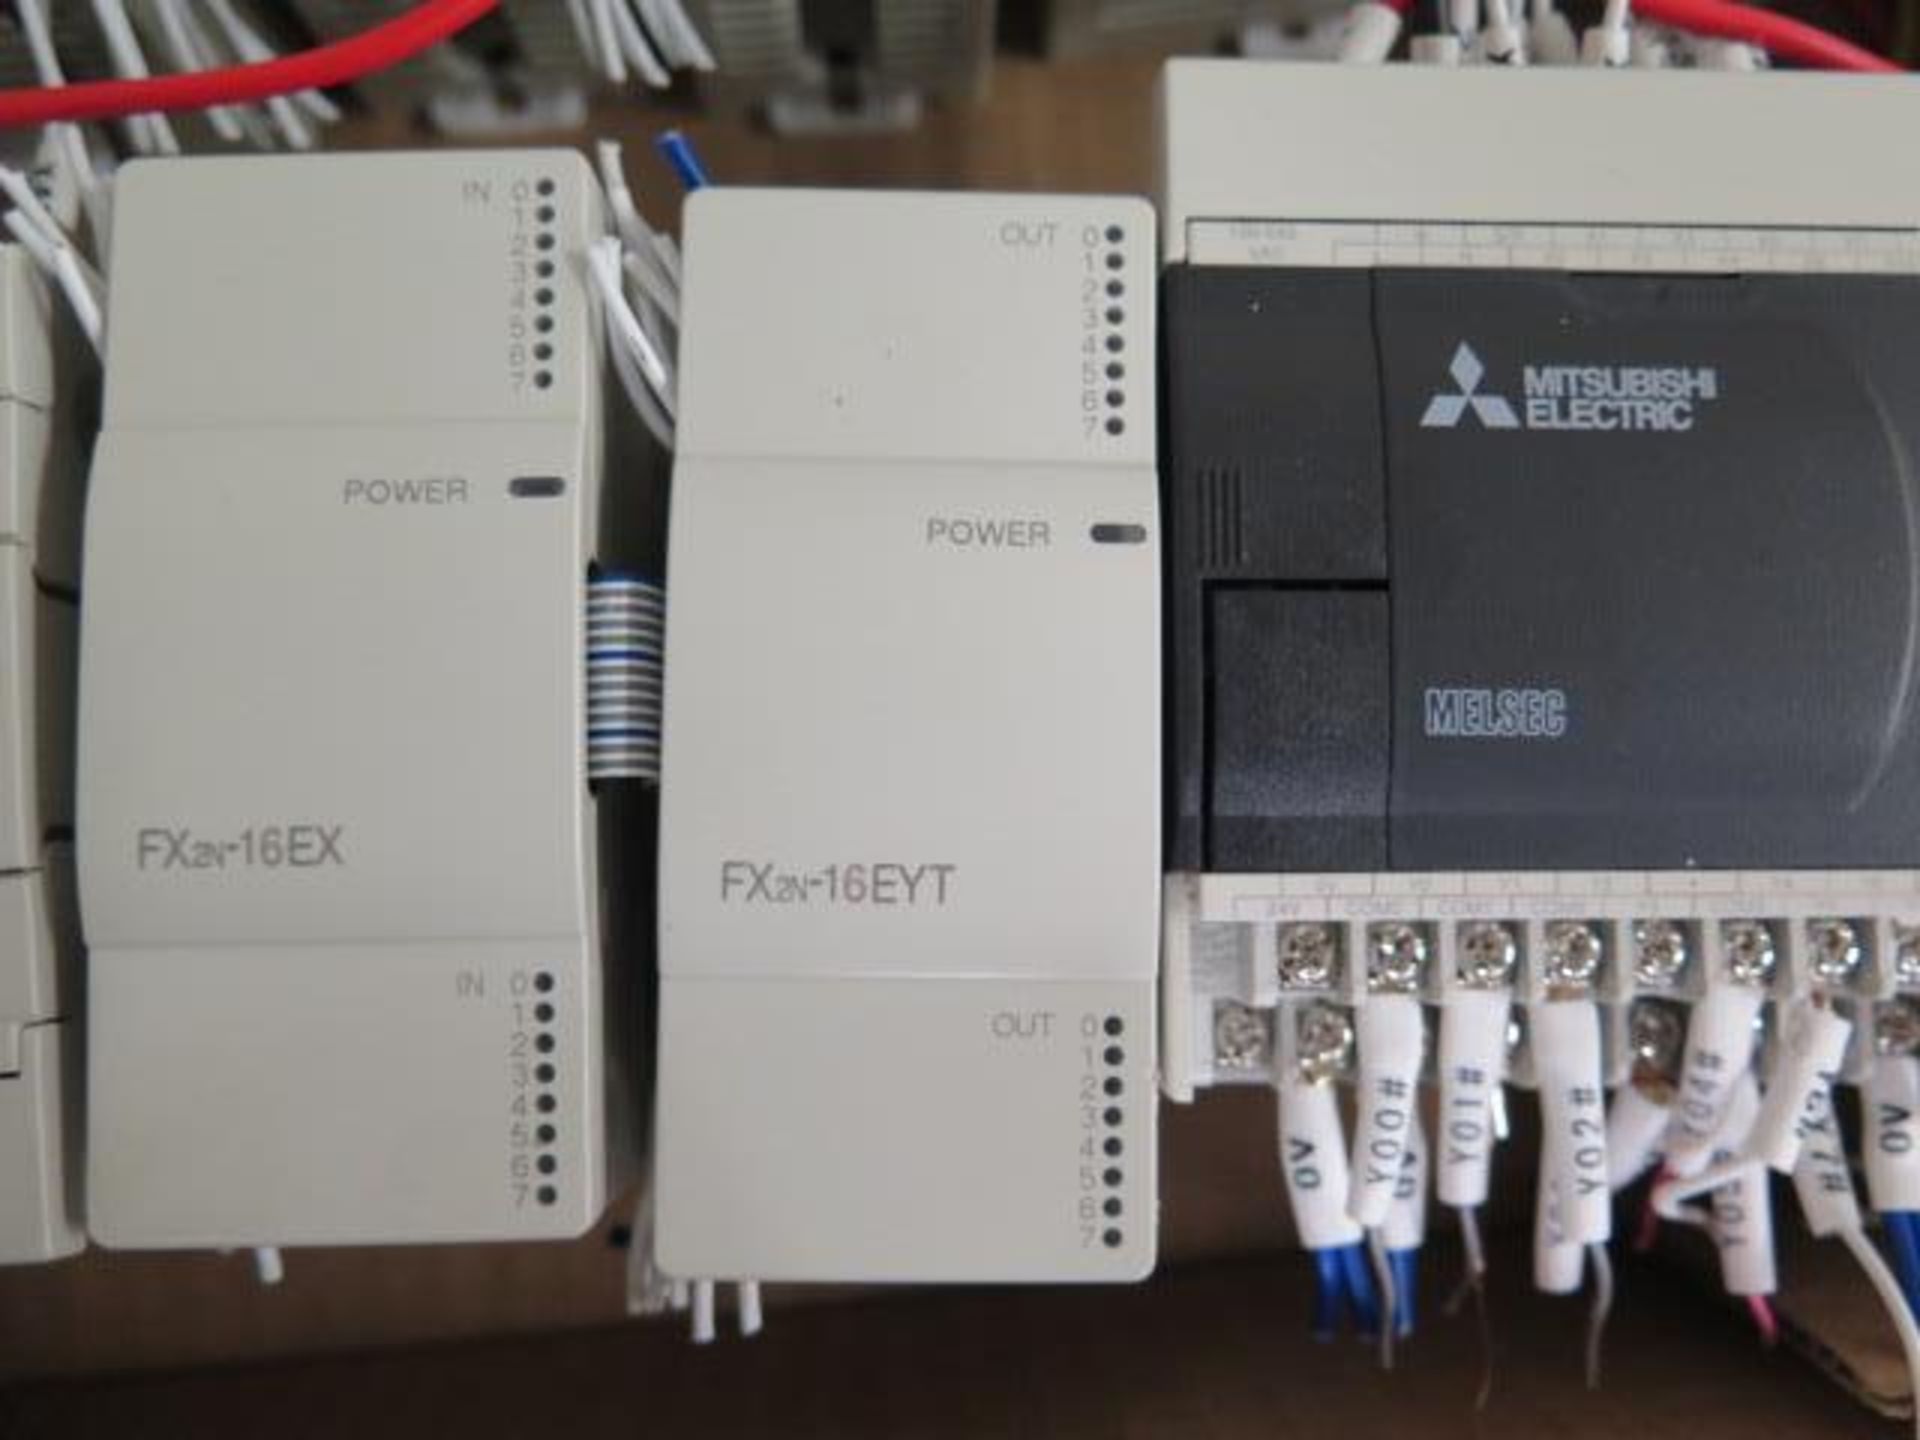 Mitsubishi Electric FX3GA-60MT Controller w/ FX2N-16EX Controller, FX2N-16EYT Controller and FX3GA-4 - Image 3 of 4